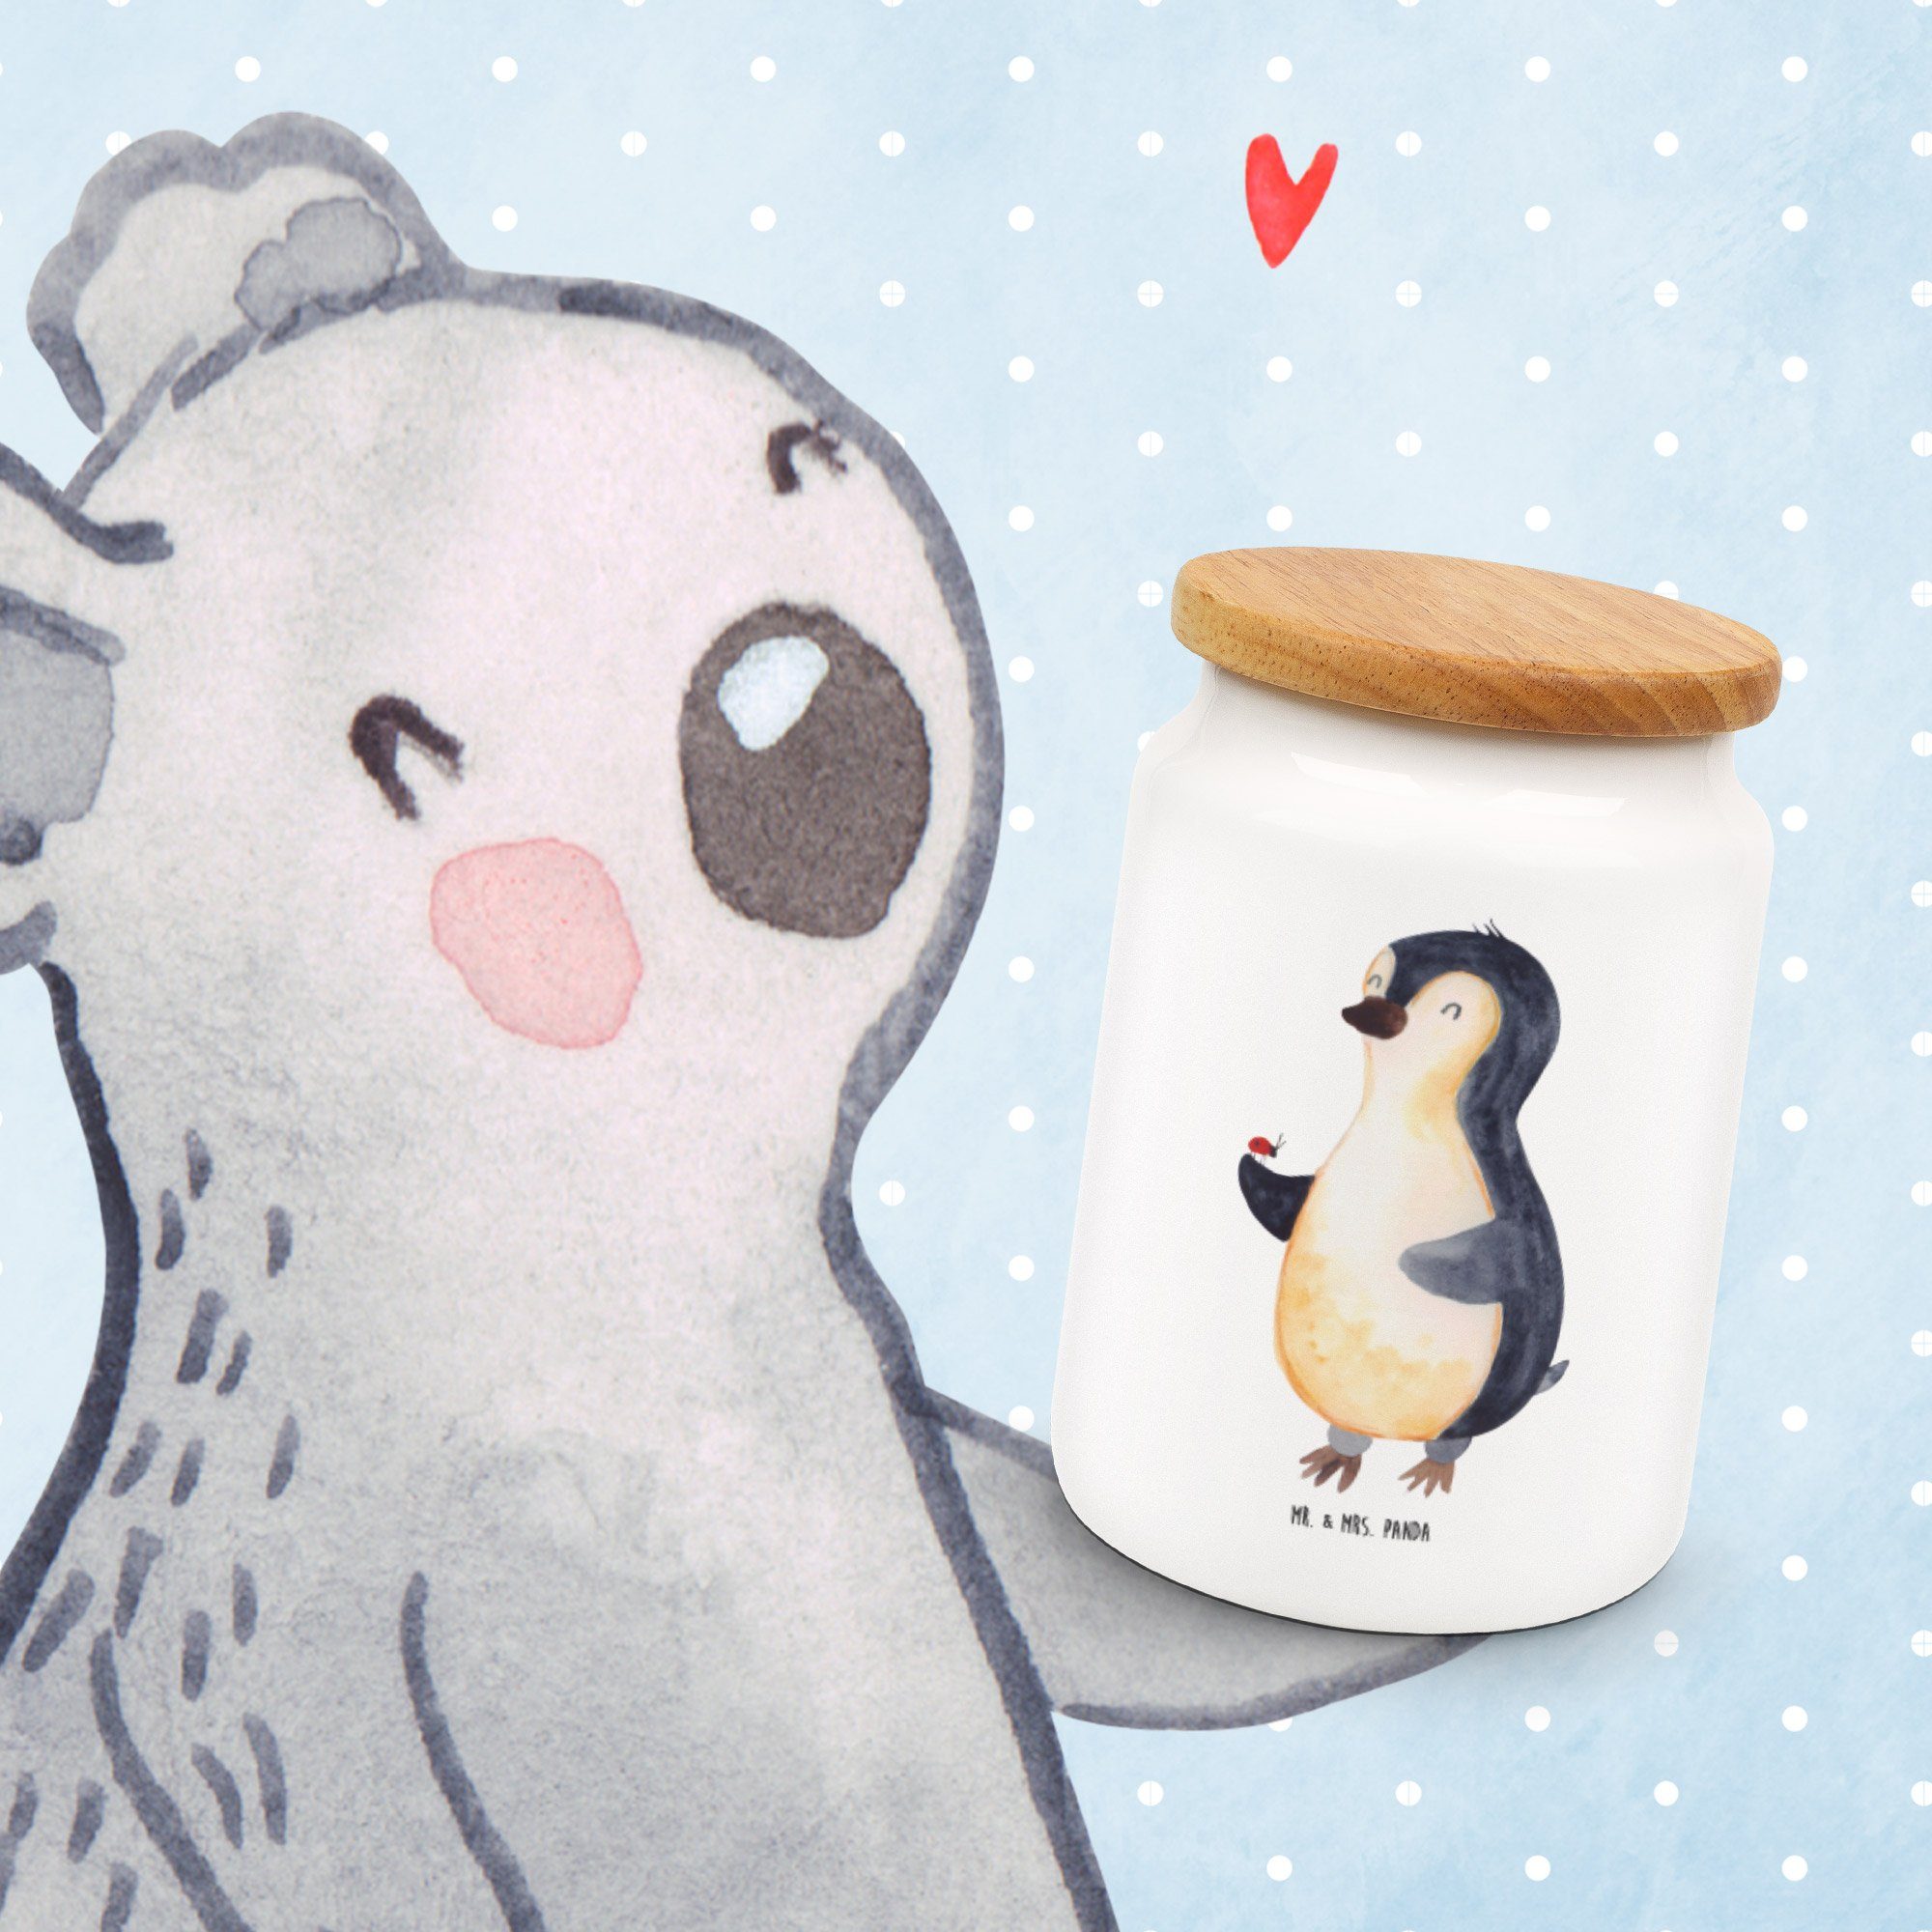 Mr. & Mrs. Panda (1-tlg) Vorratsdose Geschenk, Wunder, - Ke, Weiß - Keramik, Pinguin kleine Marienkäfer Vorratsdose